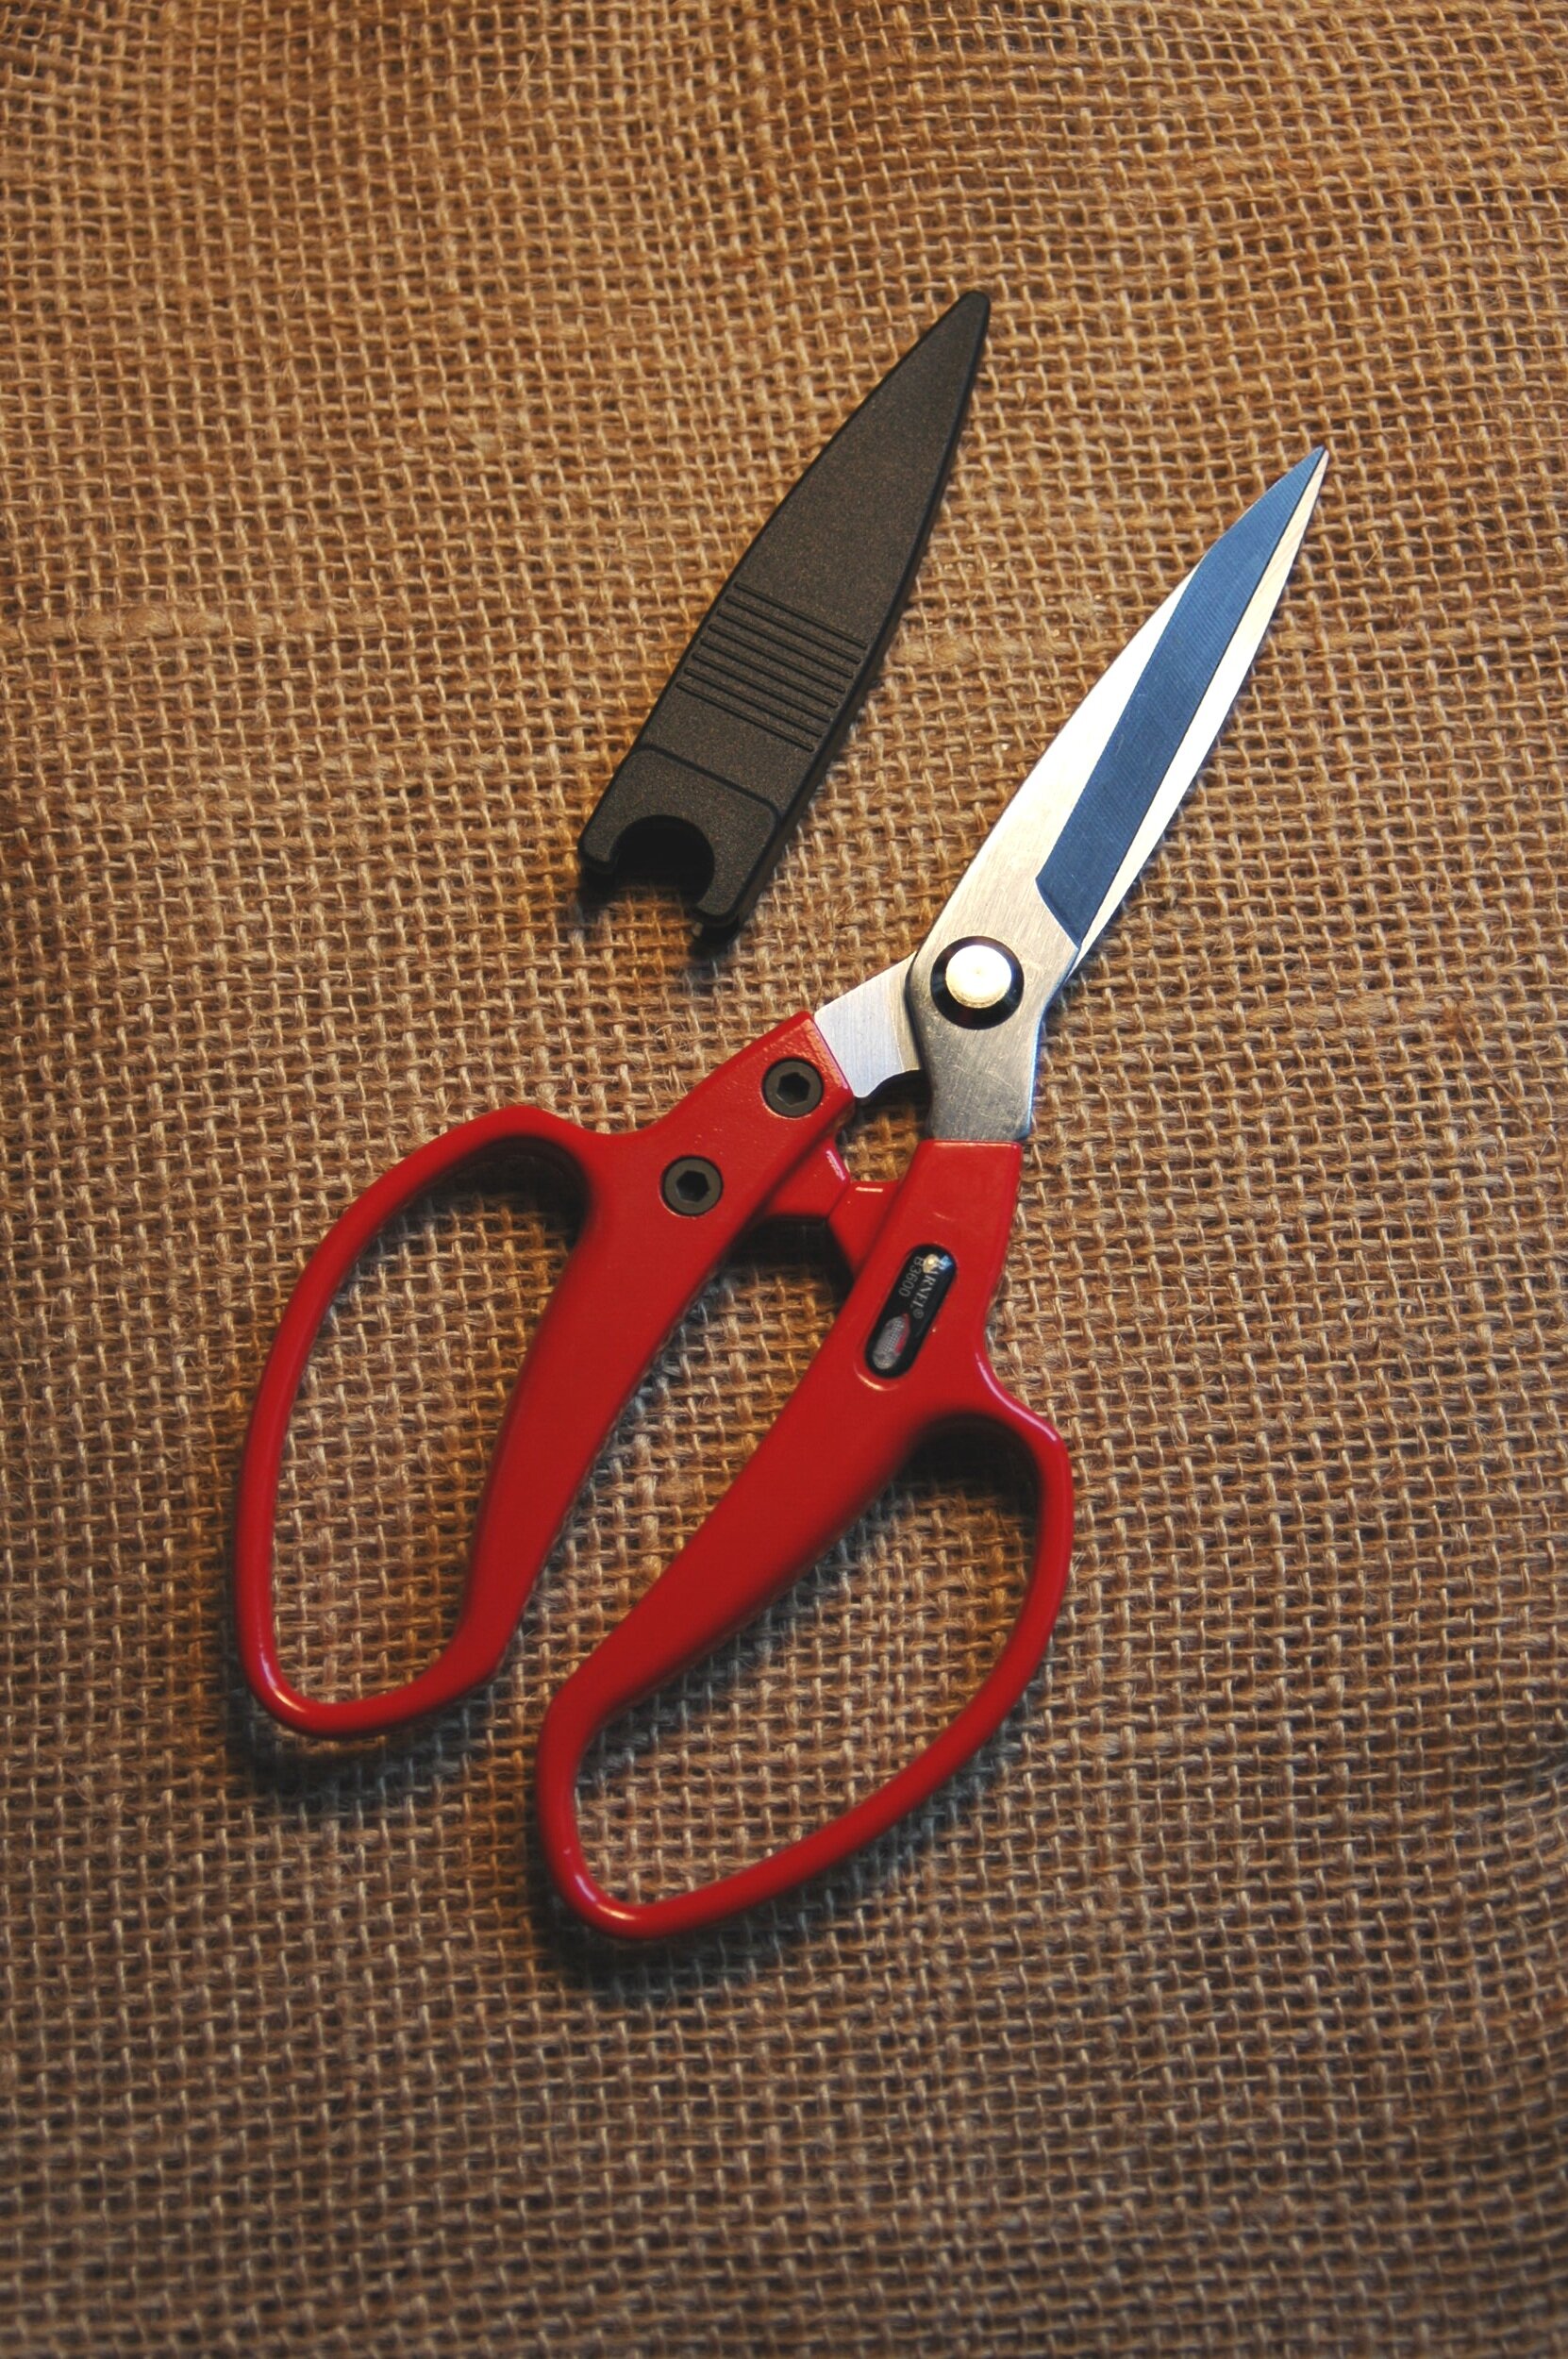 Professional scissors for Pruning barnel Rotating Grip-bab318 